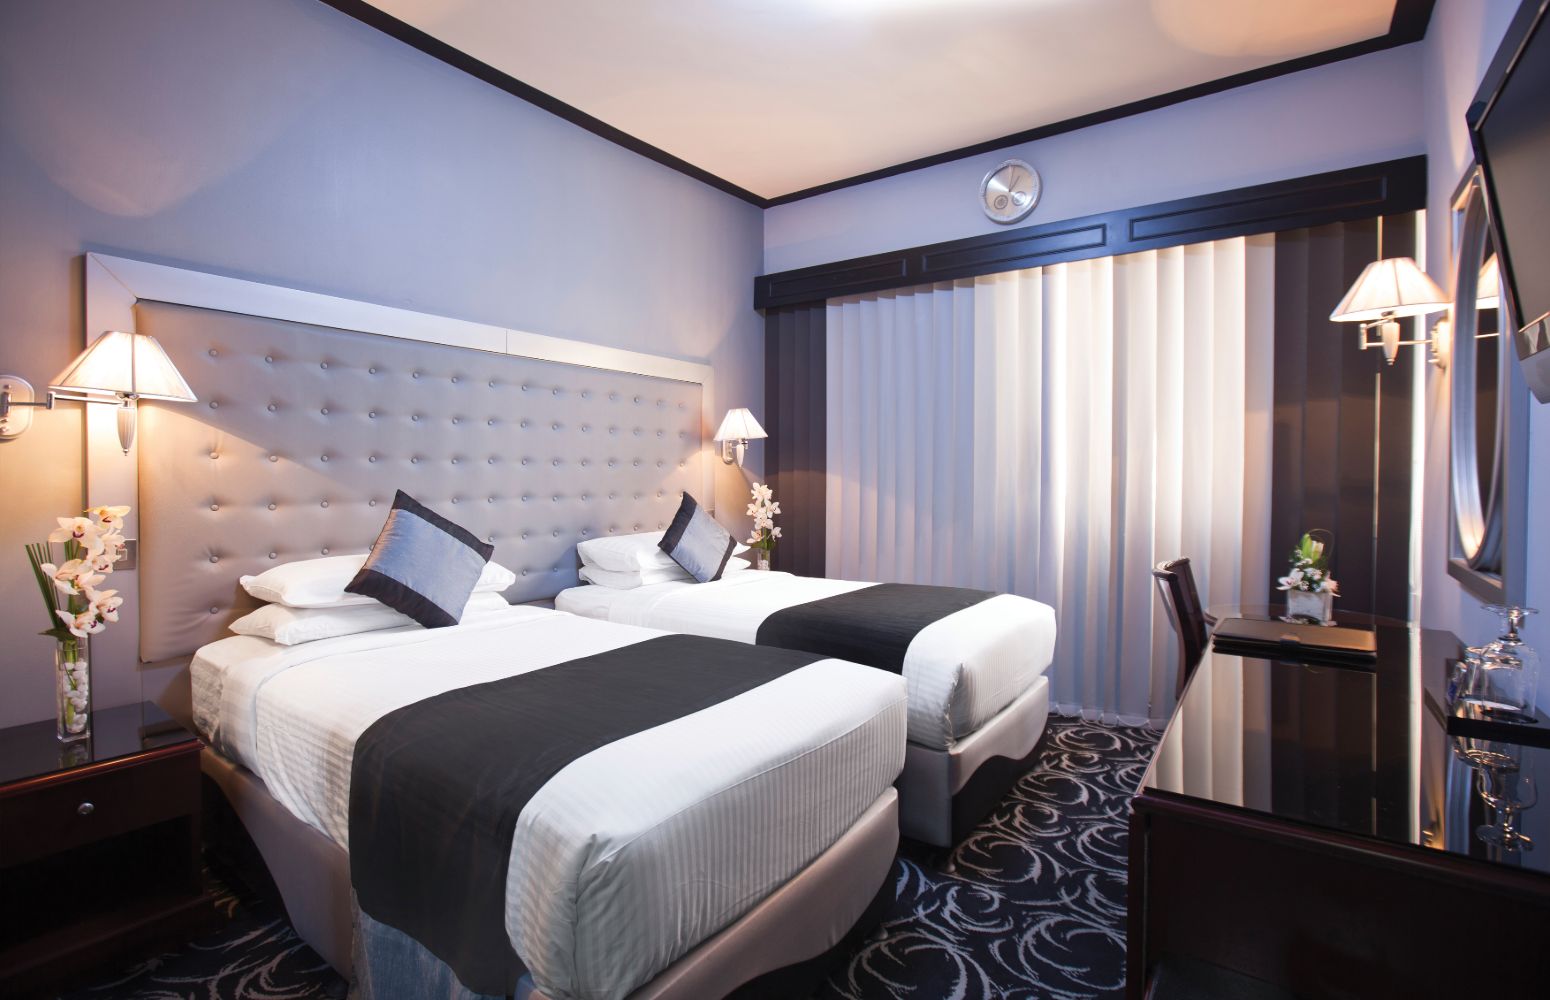 Broadway Hotel Rooms -  3 Star Hotels in Deira Dubai